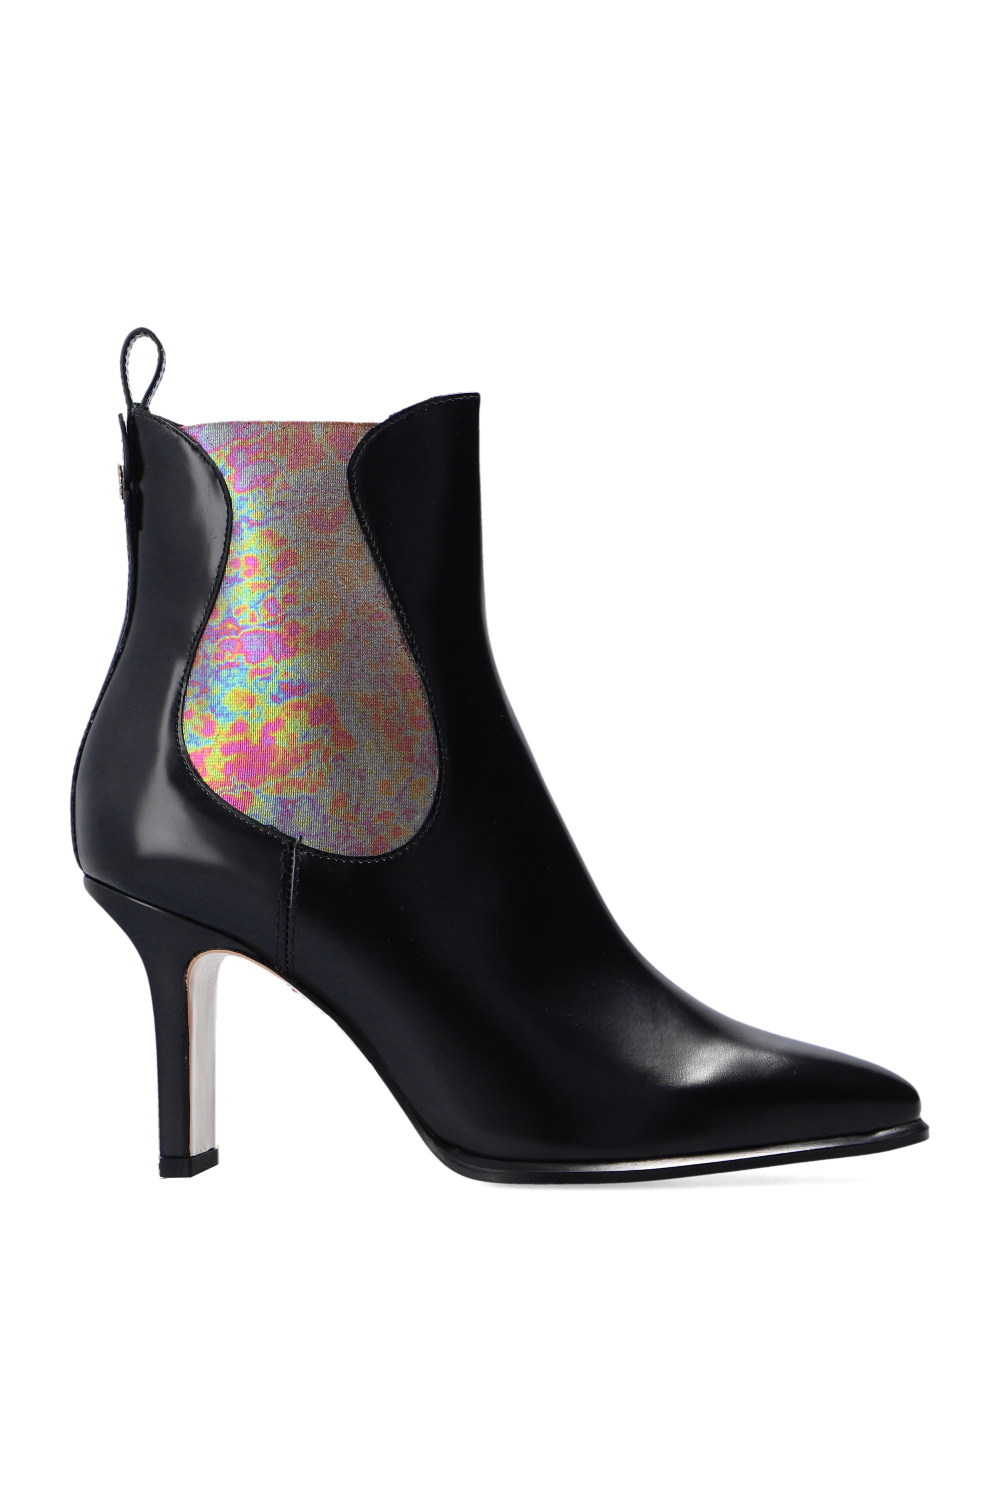 Sophia Webster ‘Allegra’ heeled ankle boots | Women's Shoes | Vitkac